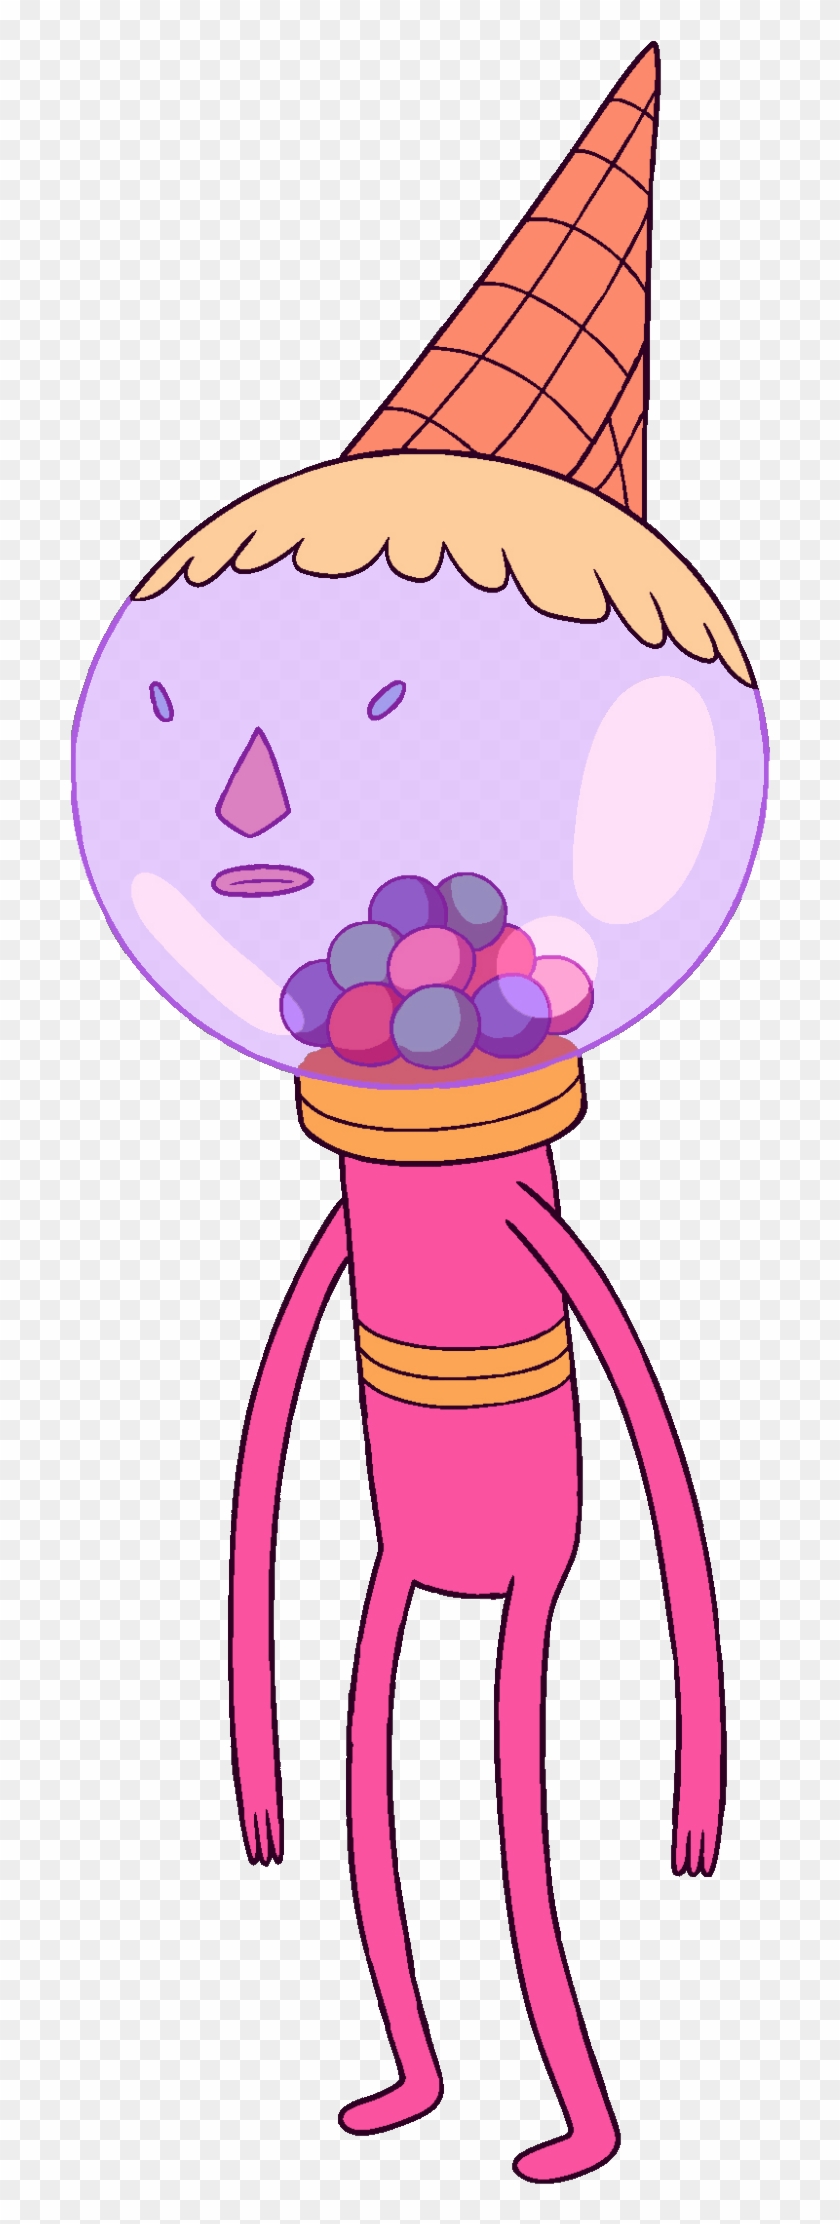 Princess Bubblegum Cartoon Network Character Fan Art - Princess Bubblegum Cartoon Network Character Fan Art #583464